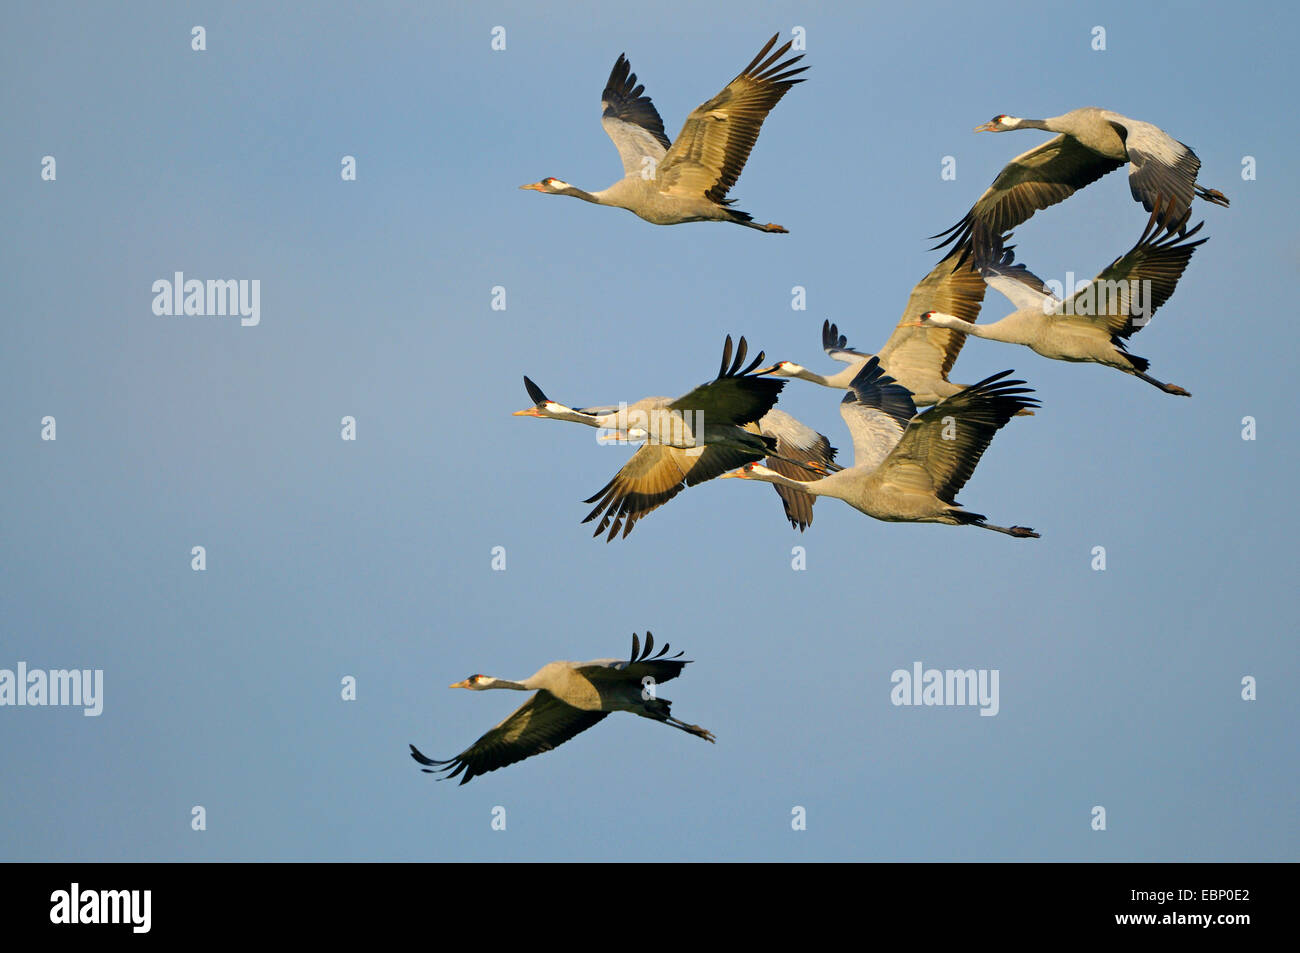 Common crane, Eurasian Crane (Grus grus), flock of cranes in flight in morning light, Germany, Mecklenburg-Western Pomerania, Western Pomerania Lagoon Area National Park Stock Photo